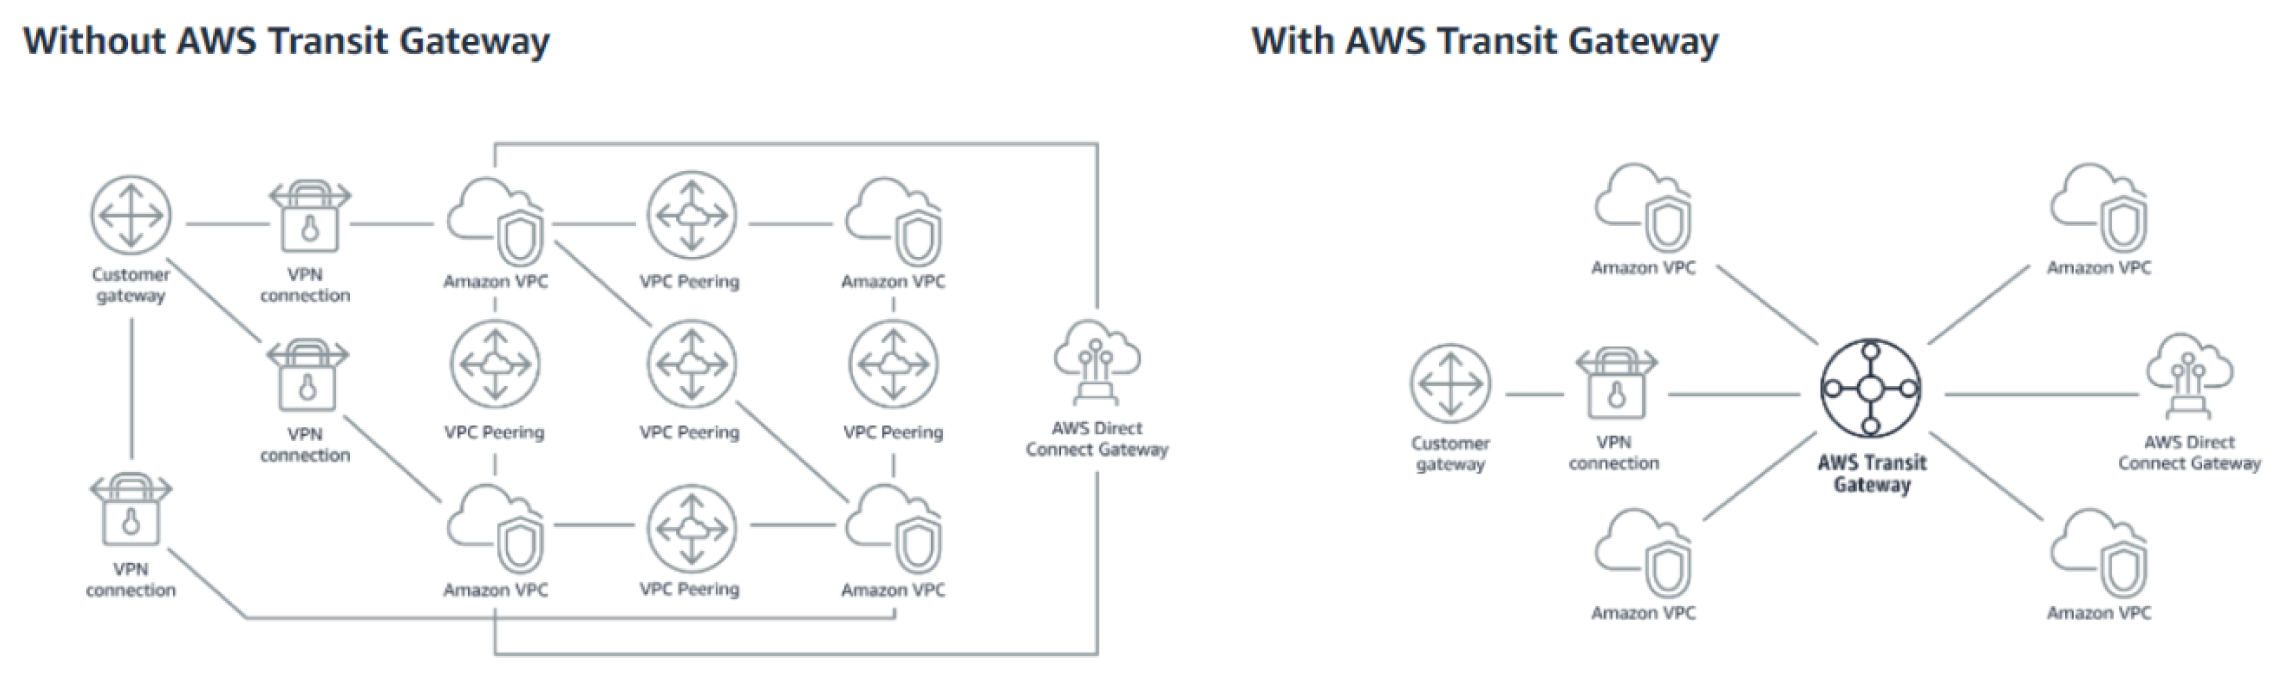 Snapshot of AWS Transit Gateway components